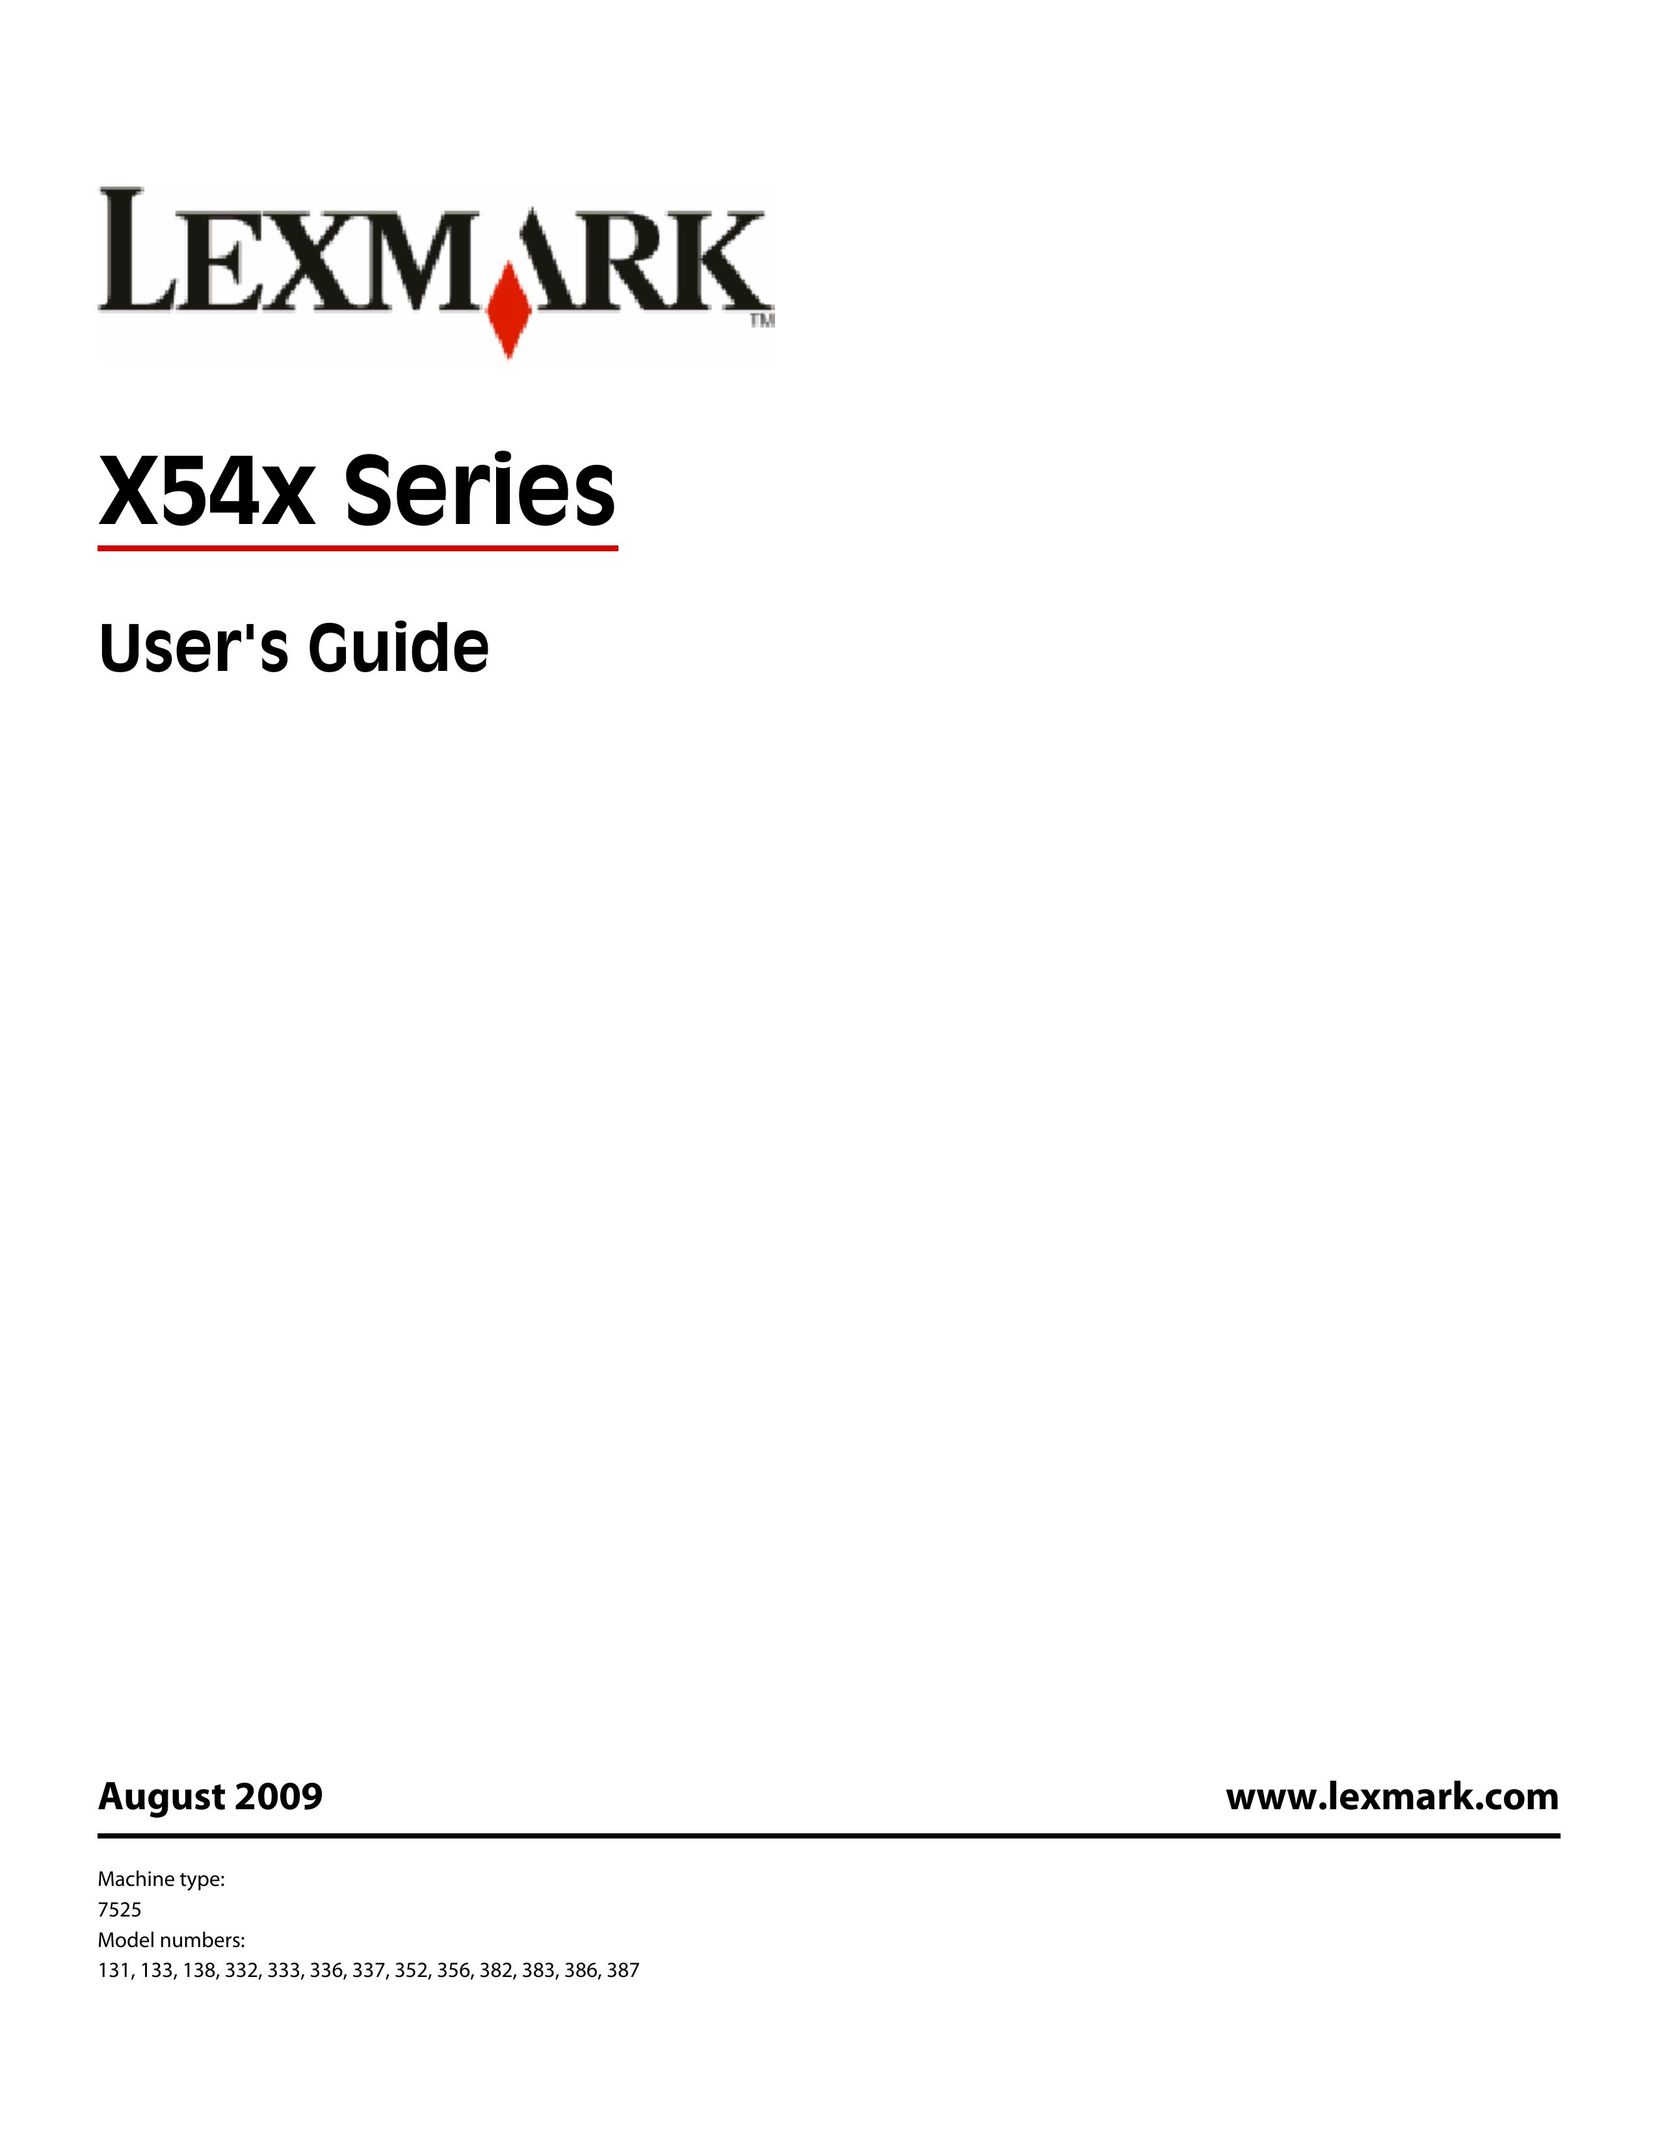 Lexmark 138 All in One Printer User Manual